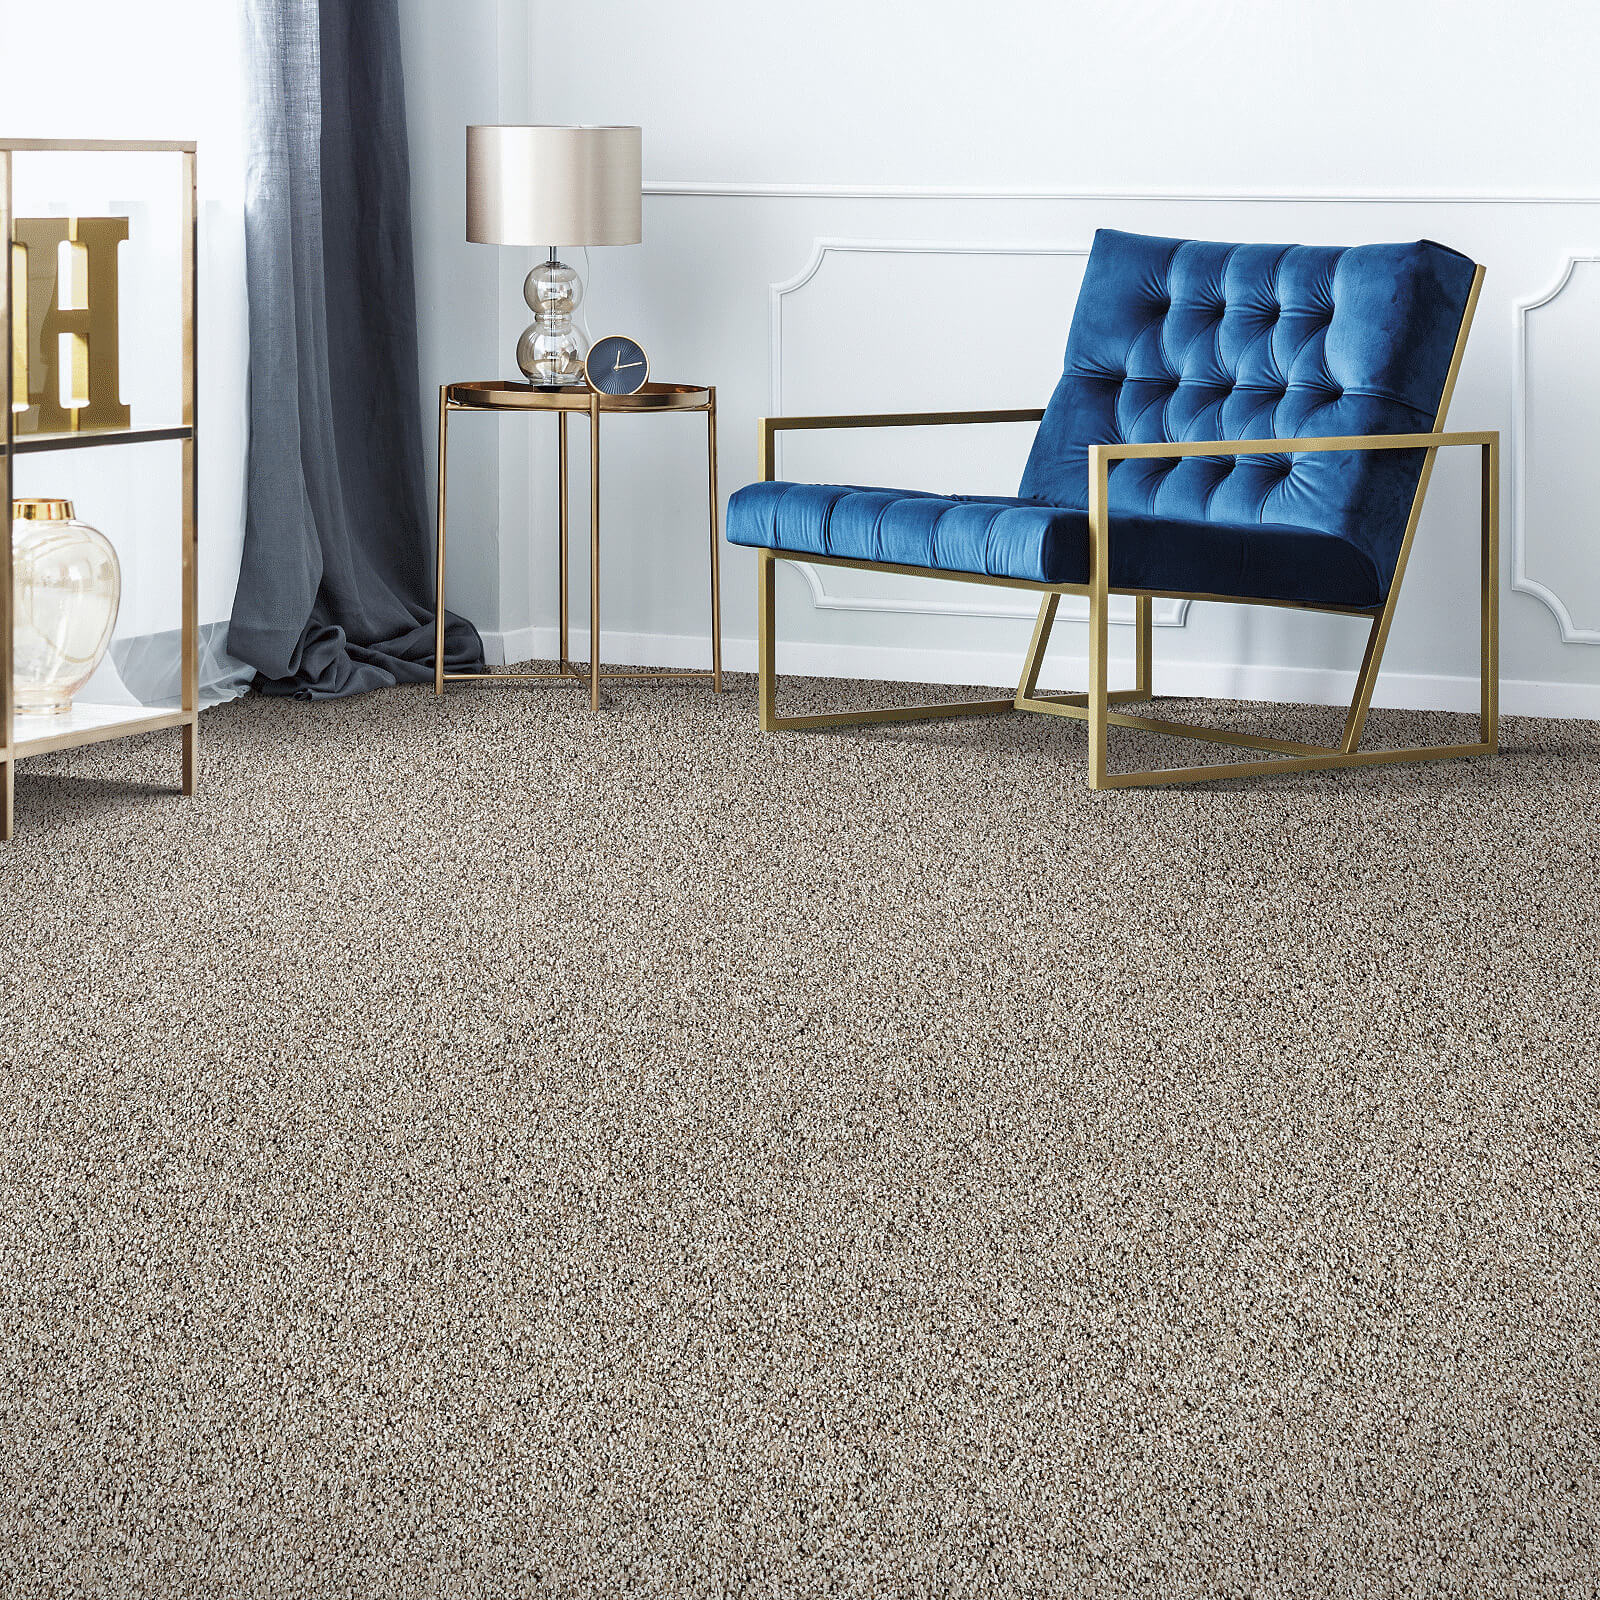 Grey soft carpet | The Flooring Center